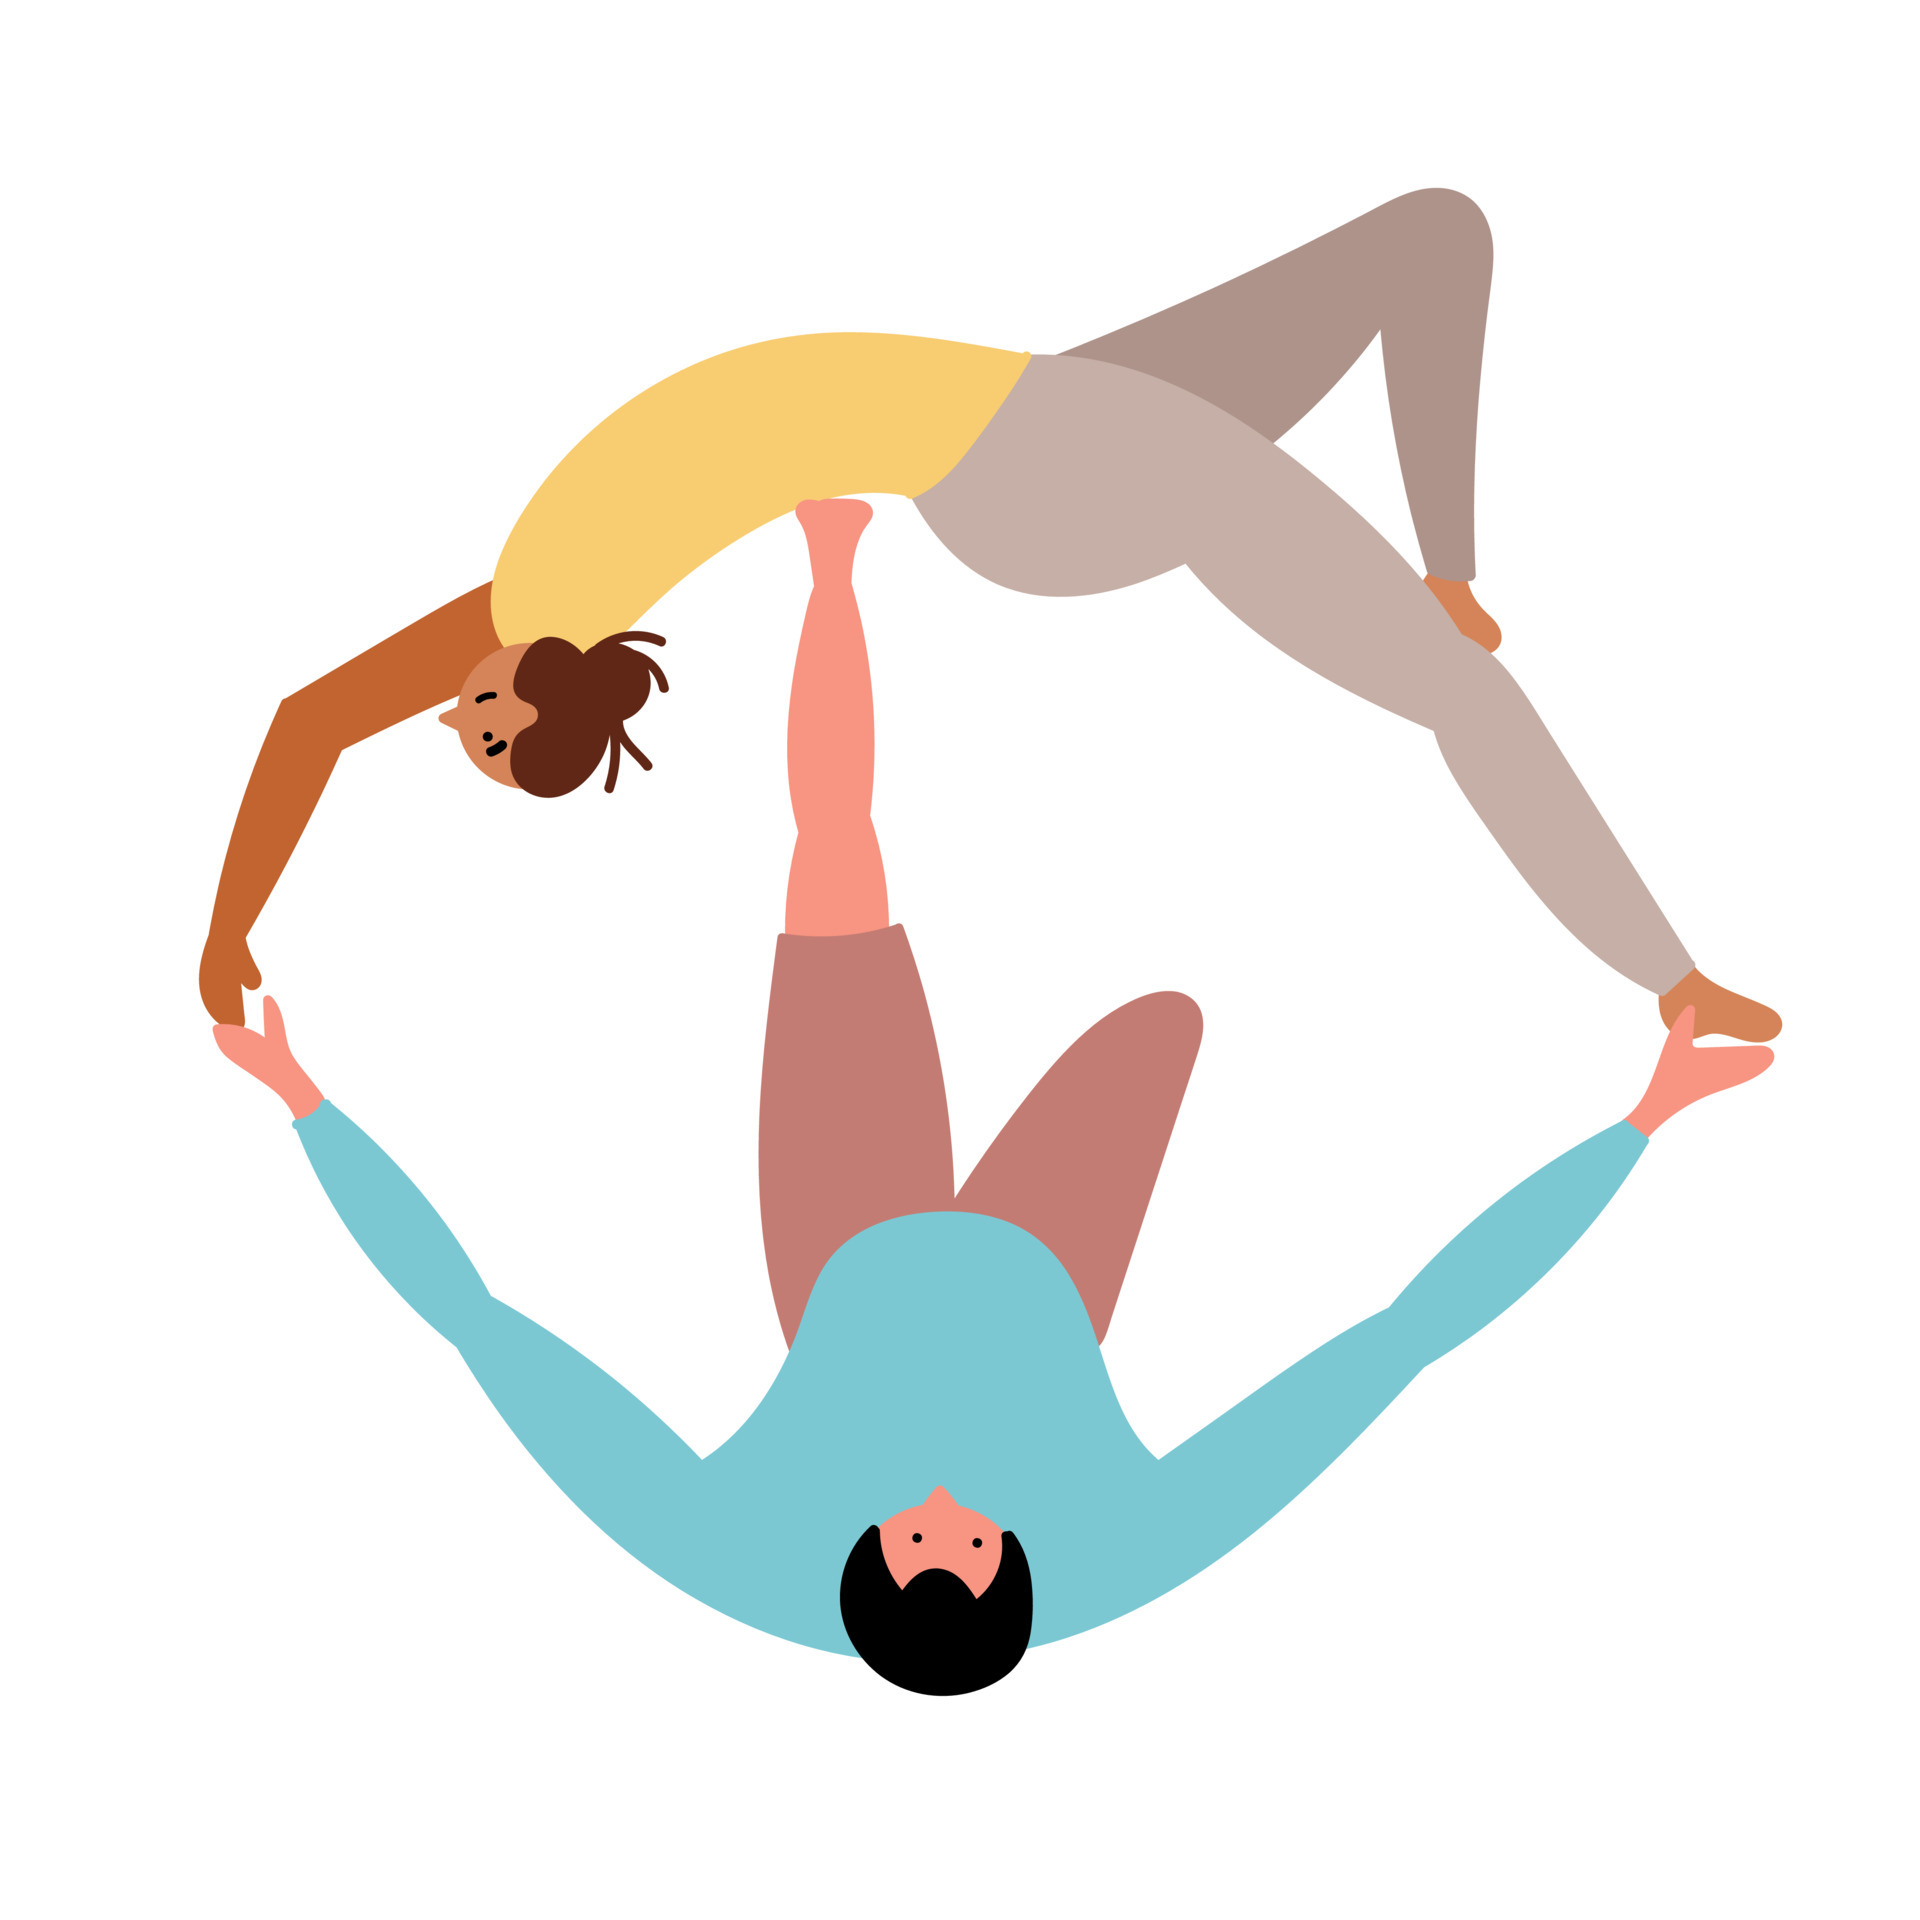 Mirror-staddle-bat | Acro yoga, Partner yoga poses, Partner yoga